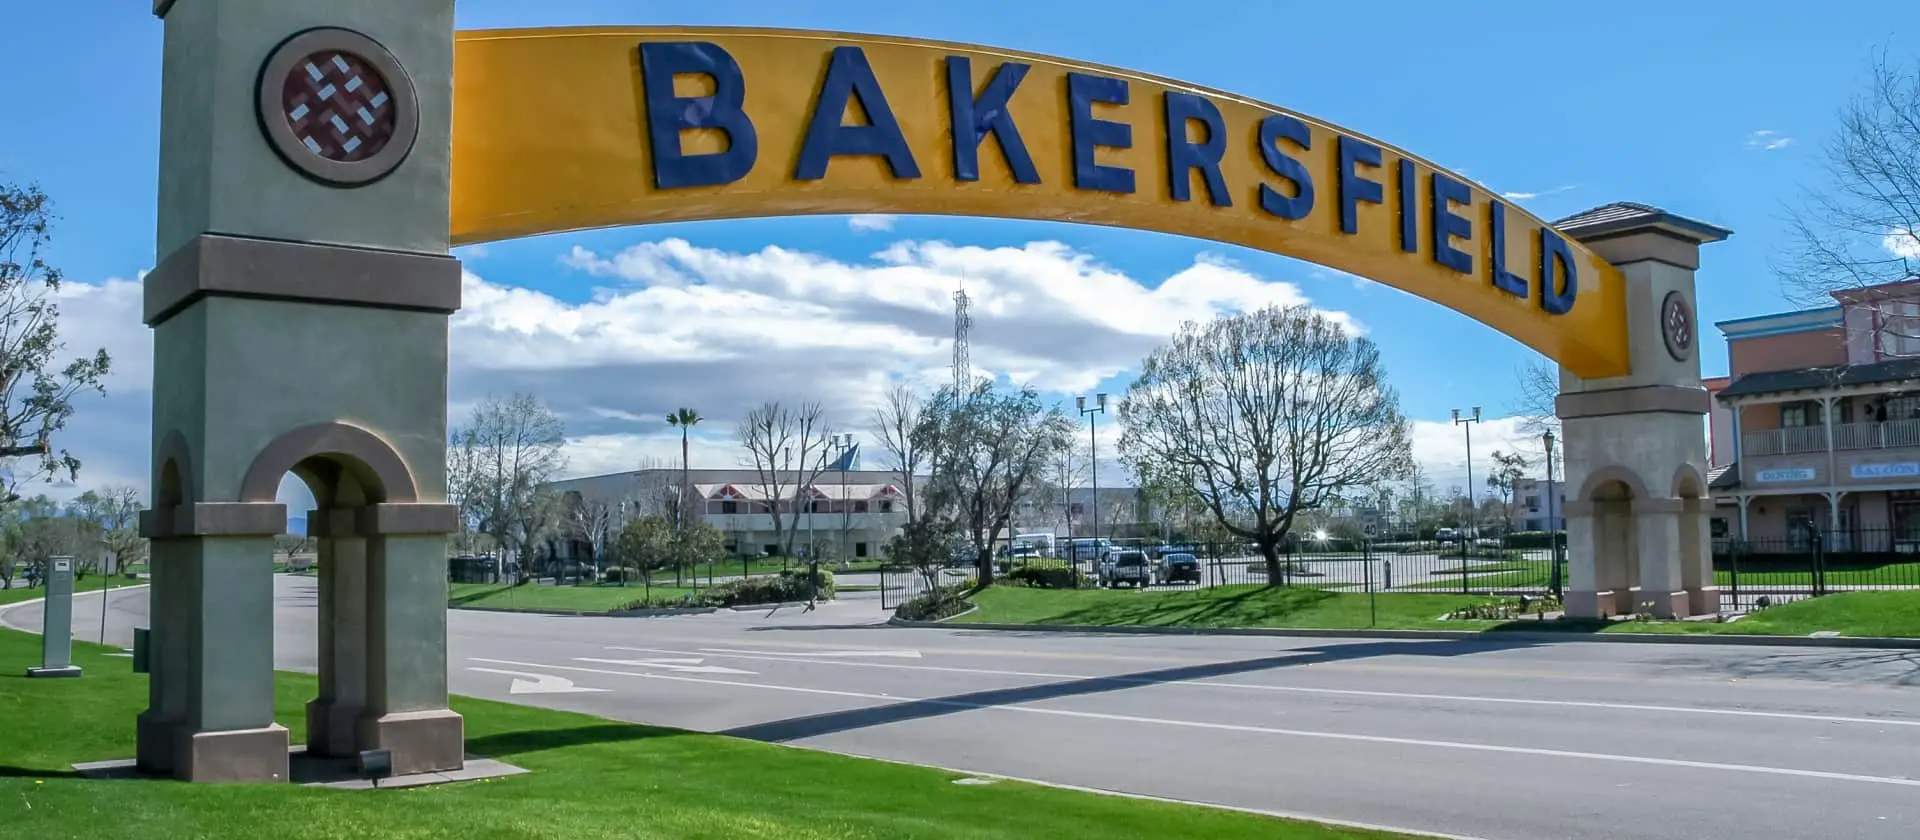 Bakersfield Crossfit Gyms - The 9 Best Bakersfield Boxes! 